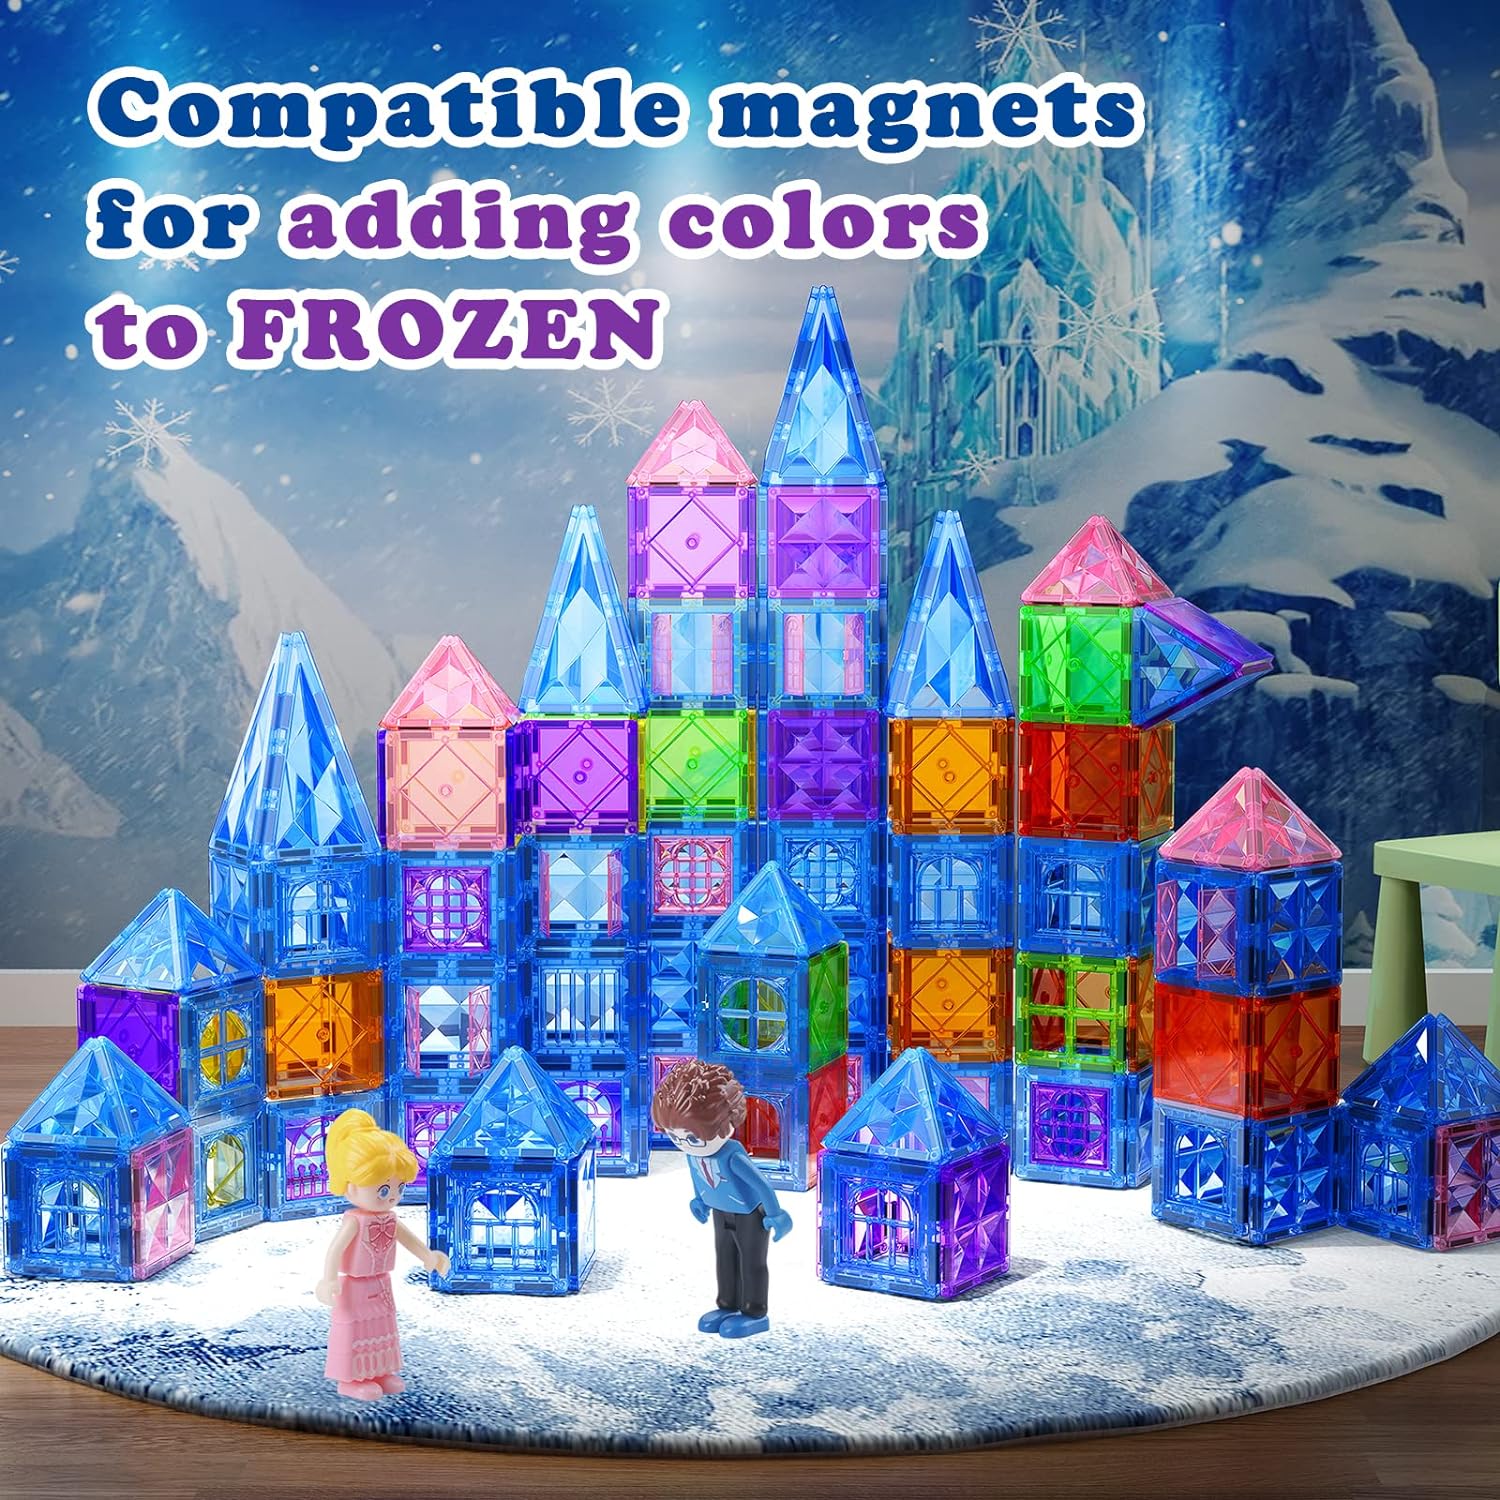 Frozen Magnetic Tiles Review